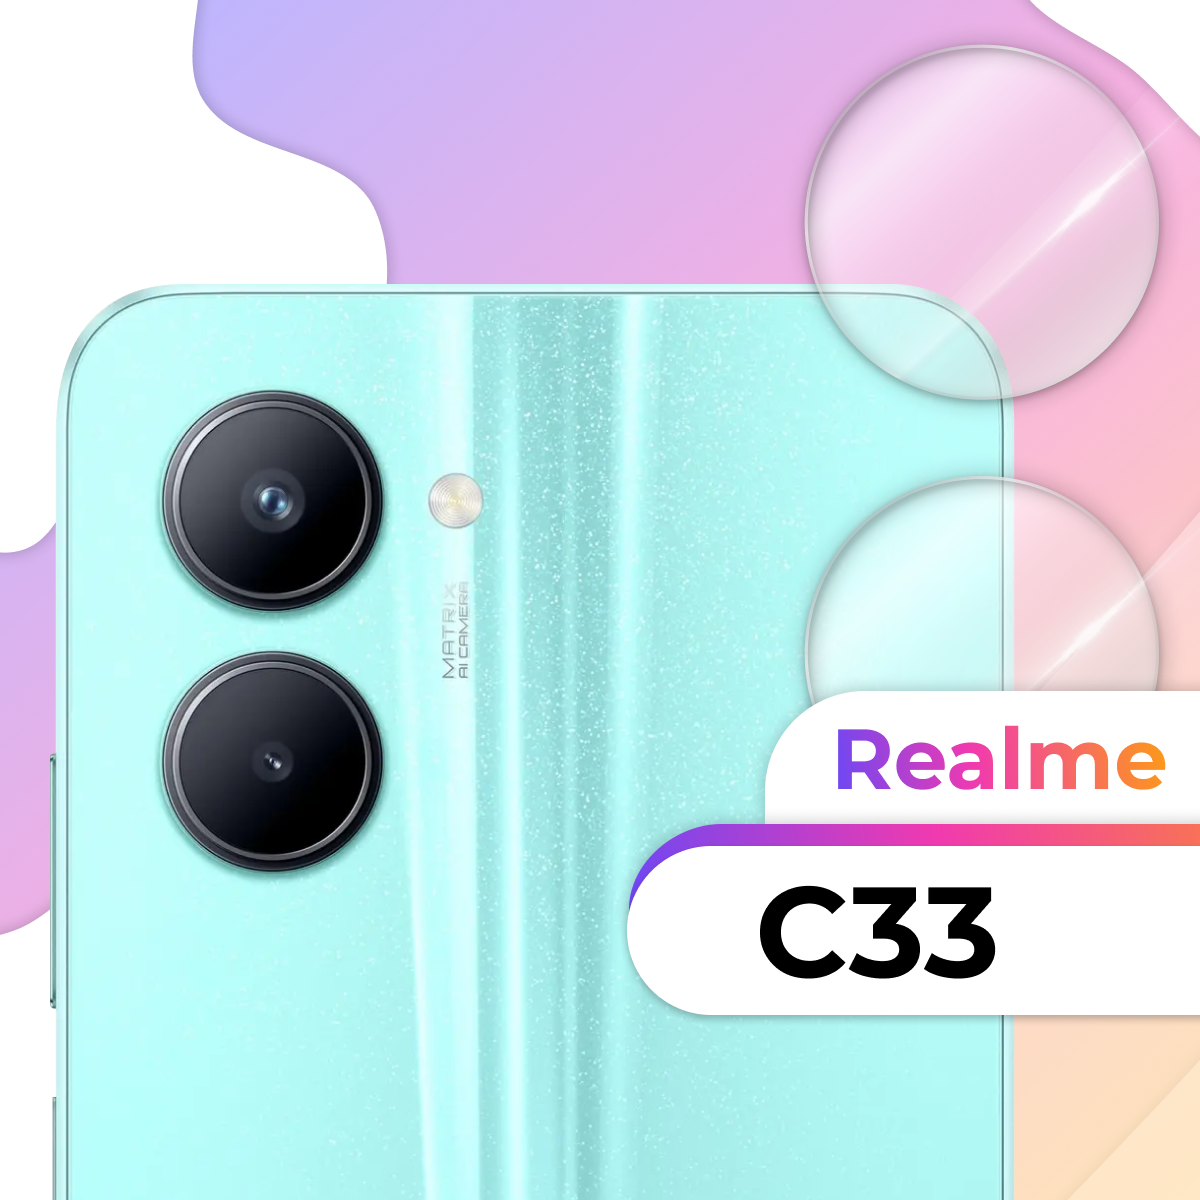 Защитное противоударное стекло на камеру смартфона Realme C33 / Прозрачное противоударное стекло для камеры телефона Реалми С33